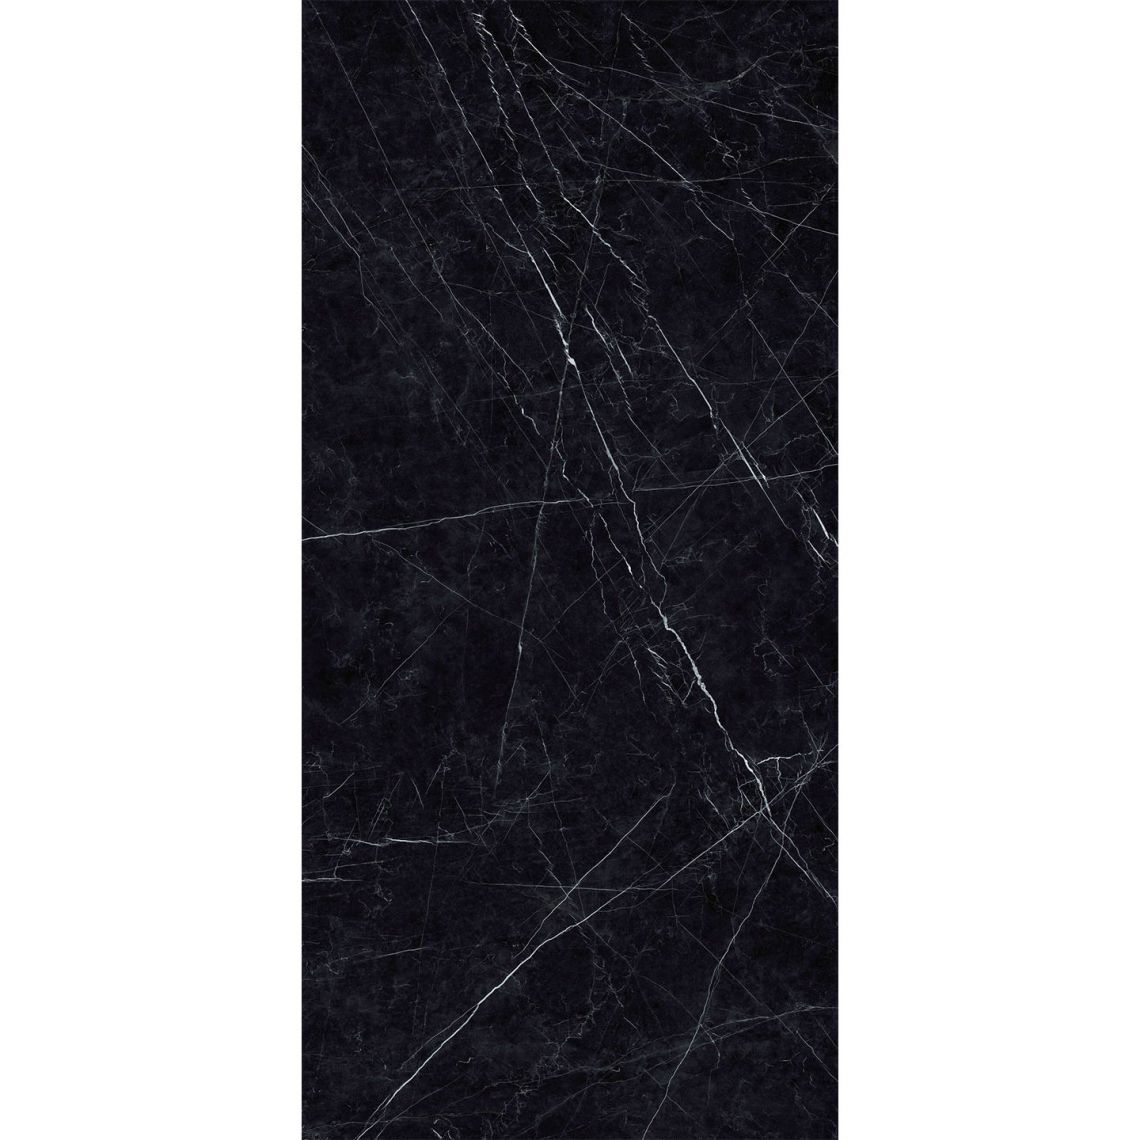 Керамогранитная плита для столешниц SapienStone Dark Marquina 320х160 silky 12мм (SSY3216523W) - Фото 1